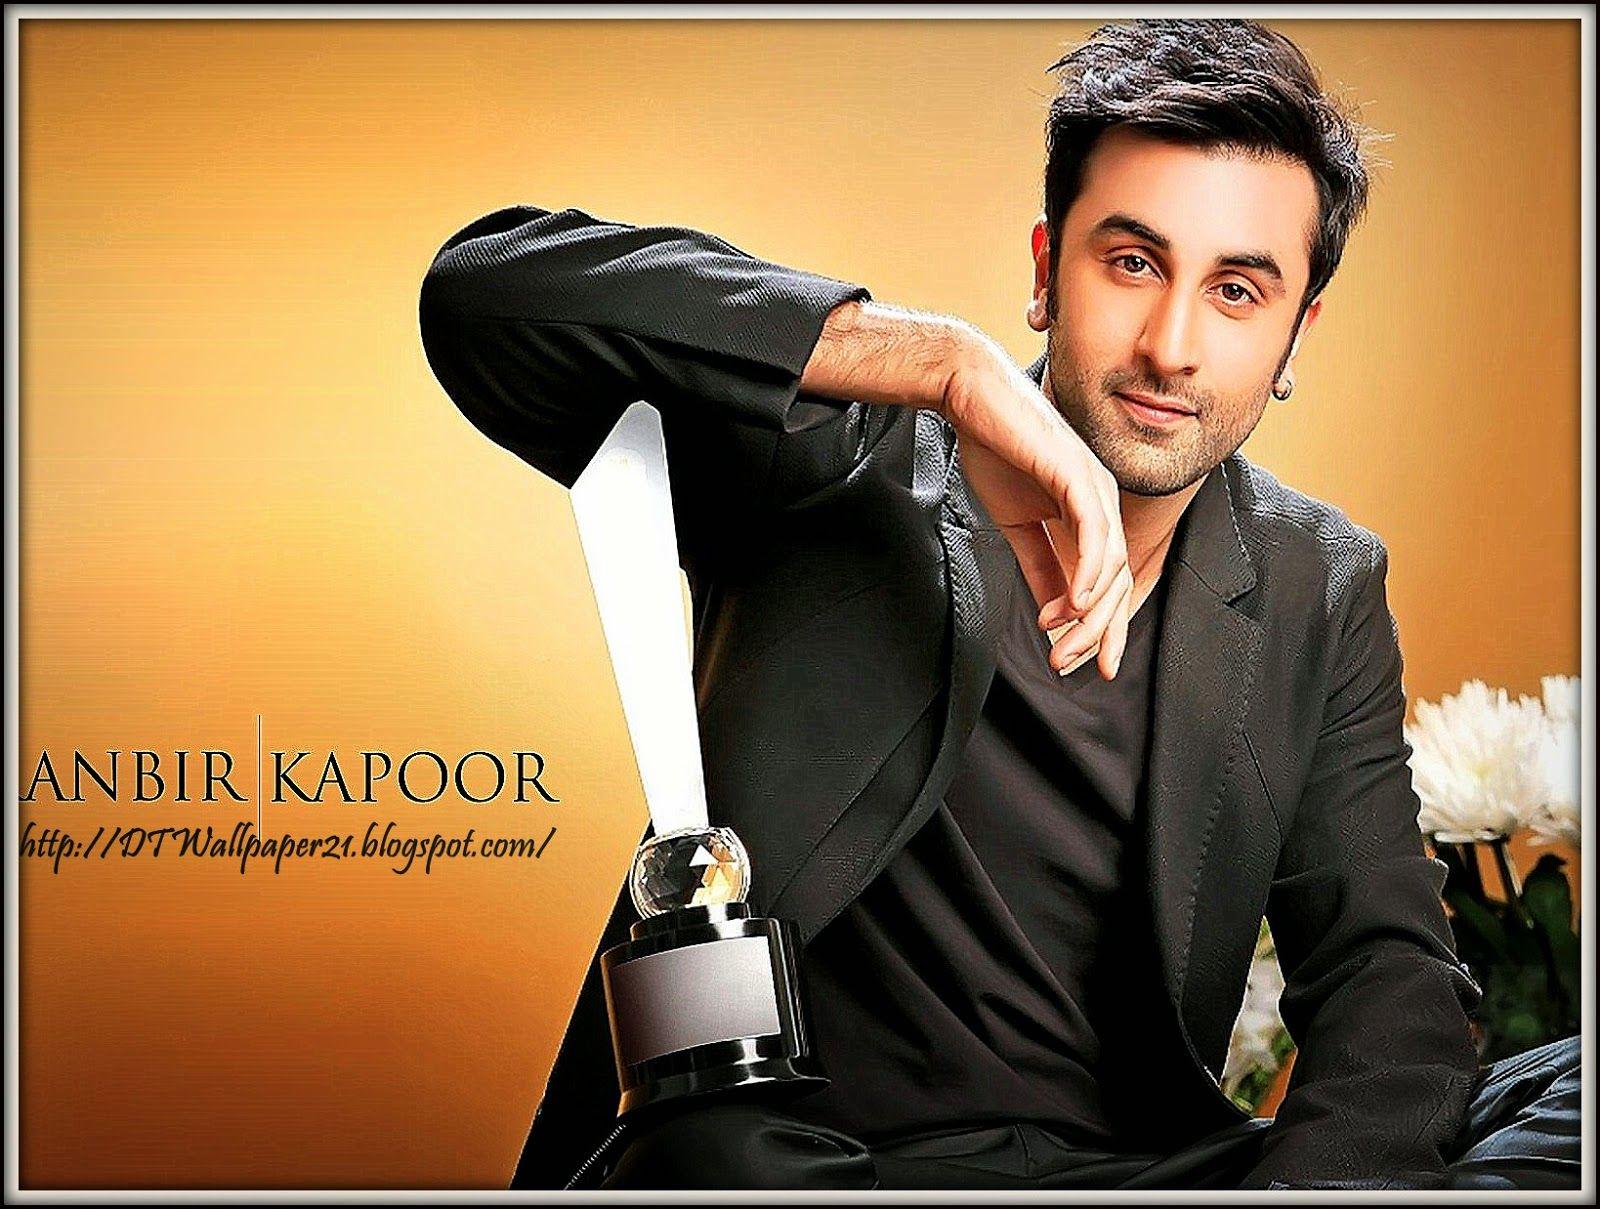 Download Ranbir Kapoor Dashing Look Wallpaper